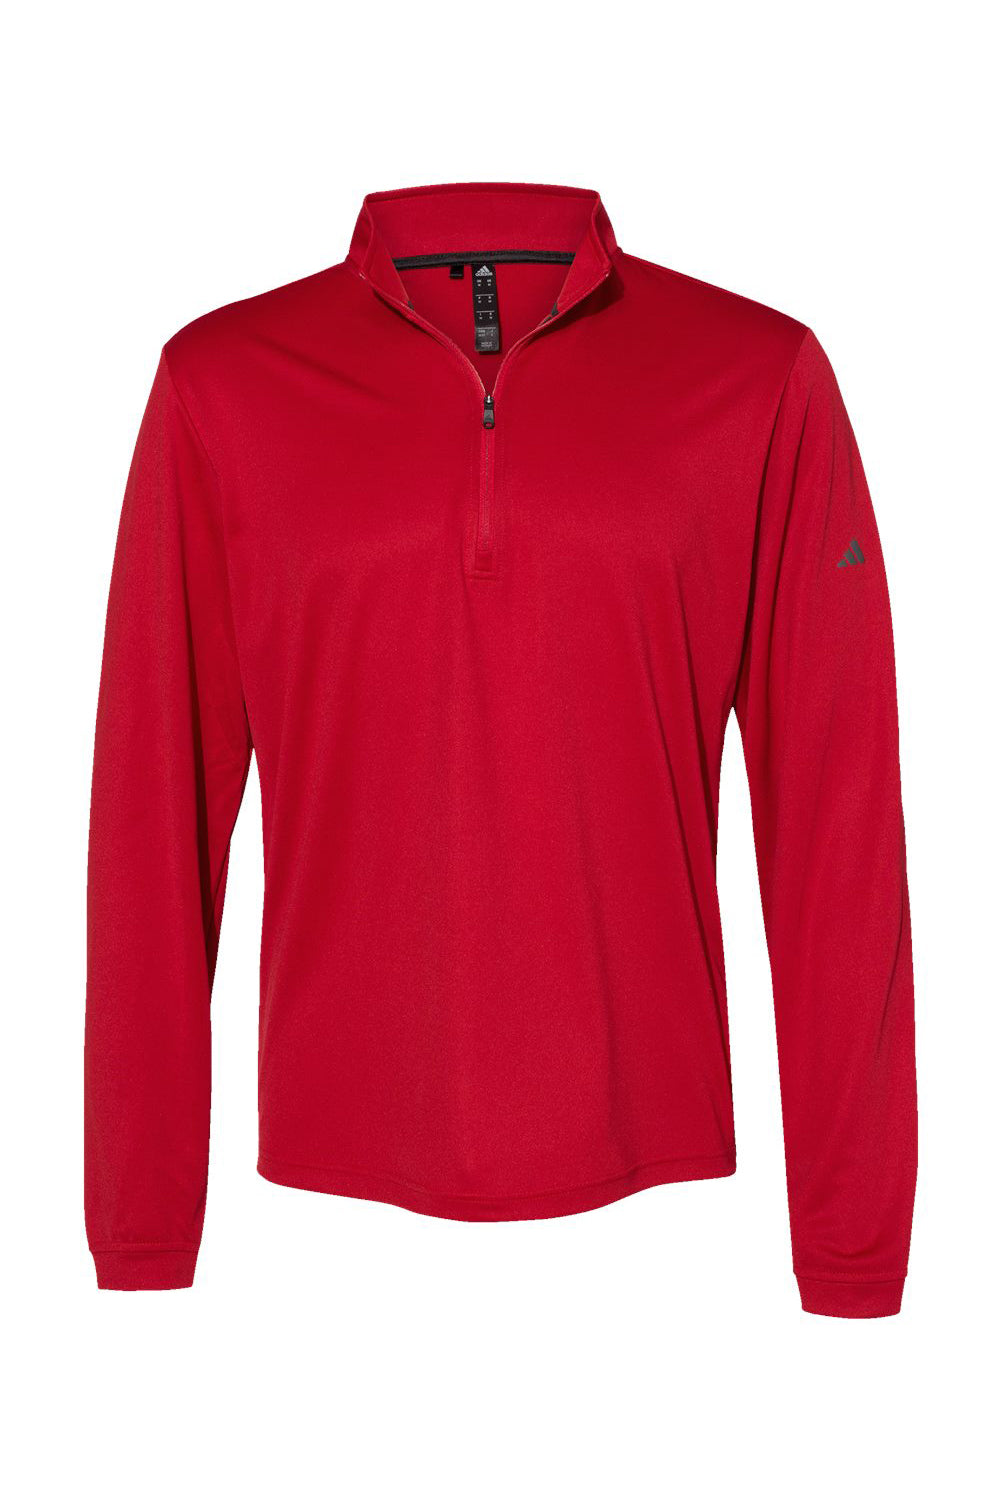 Adidas A401 Mens UPF 50+ 1/4 Zip Sweatshirt Power Red Flat Front